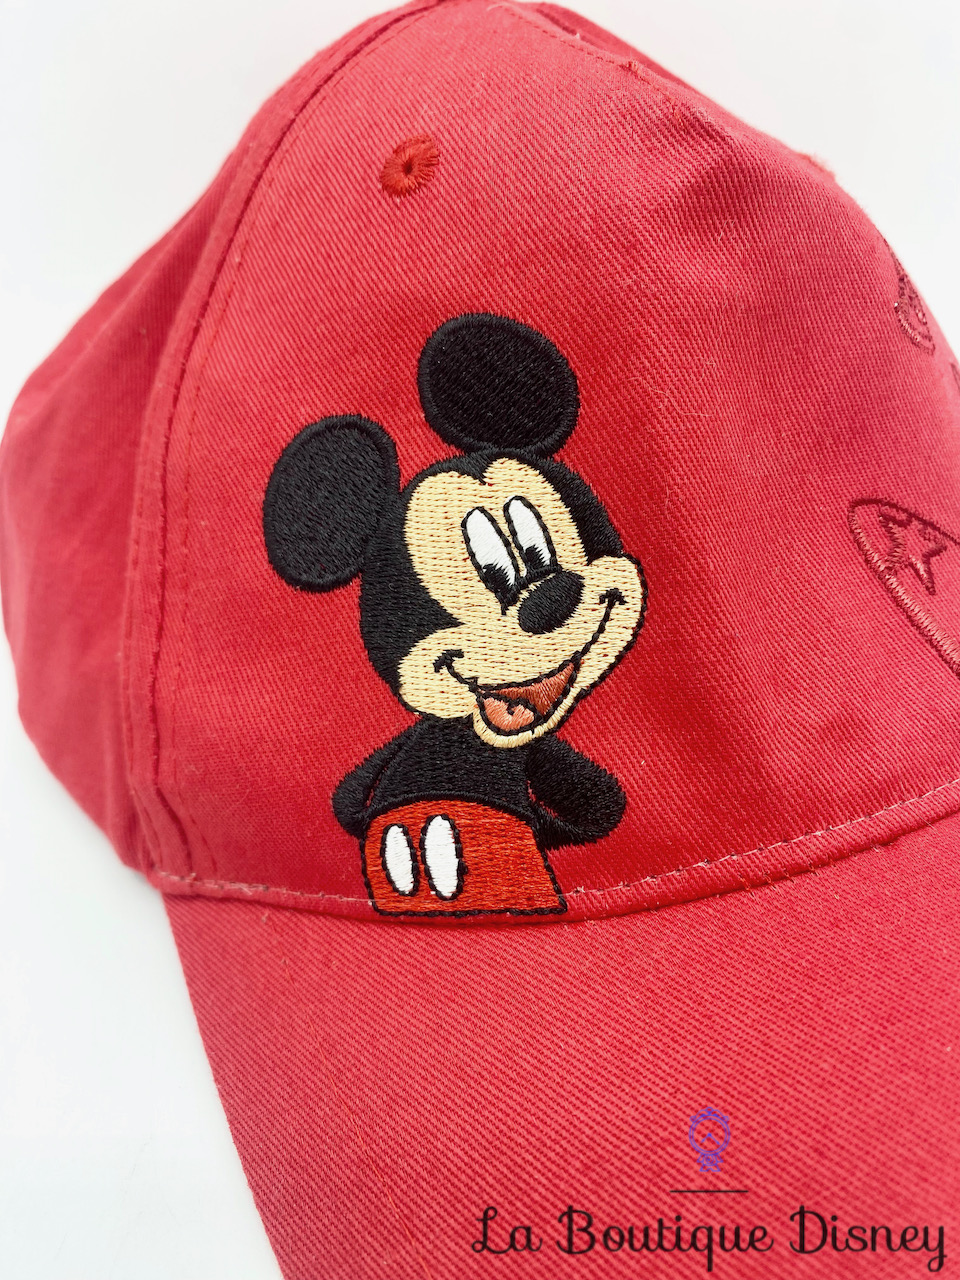 casquette-mickey-portrait-disneyland-disney-chapeau-rouge-1